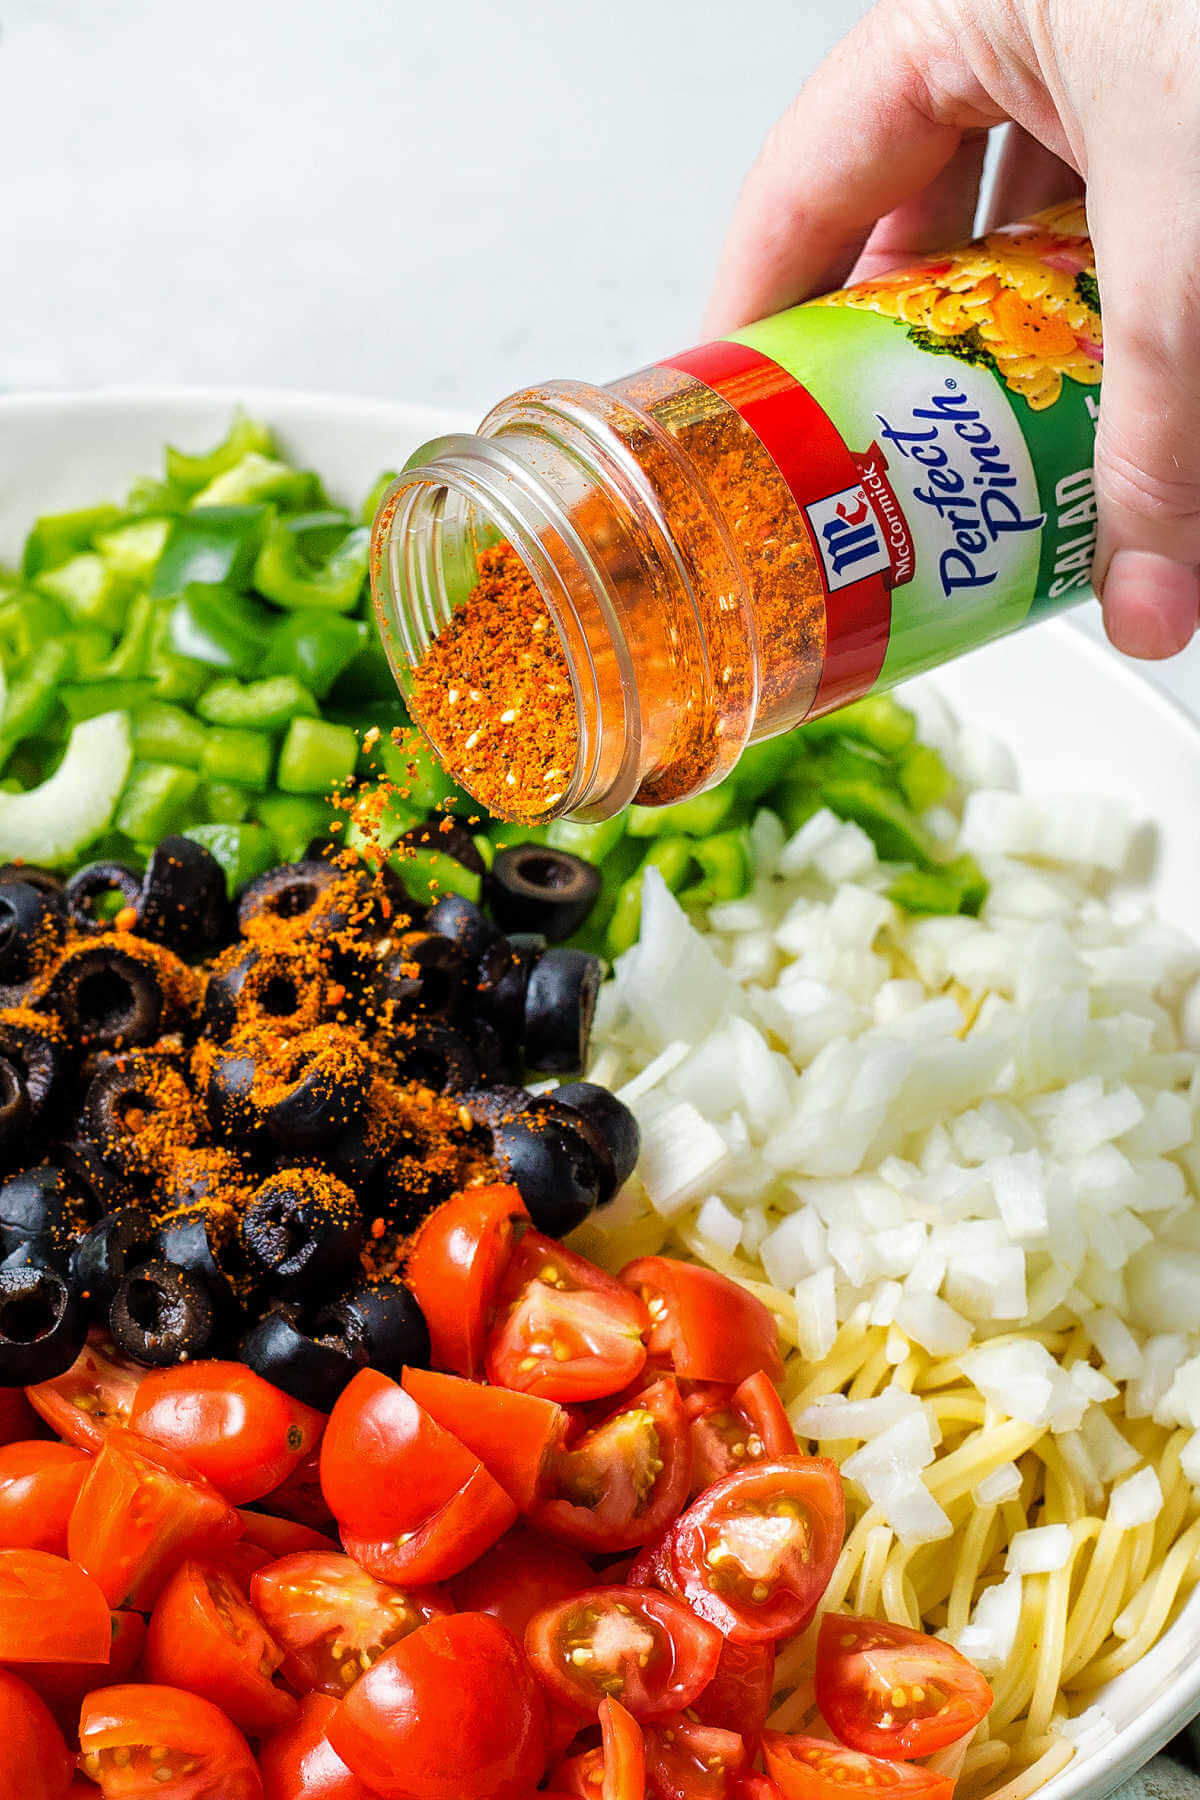 sprinkling McCormick's Salad Supreme seasoning on top of vegetables in a bowl.